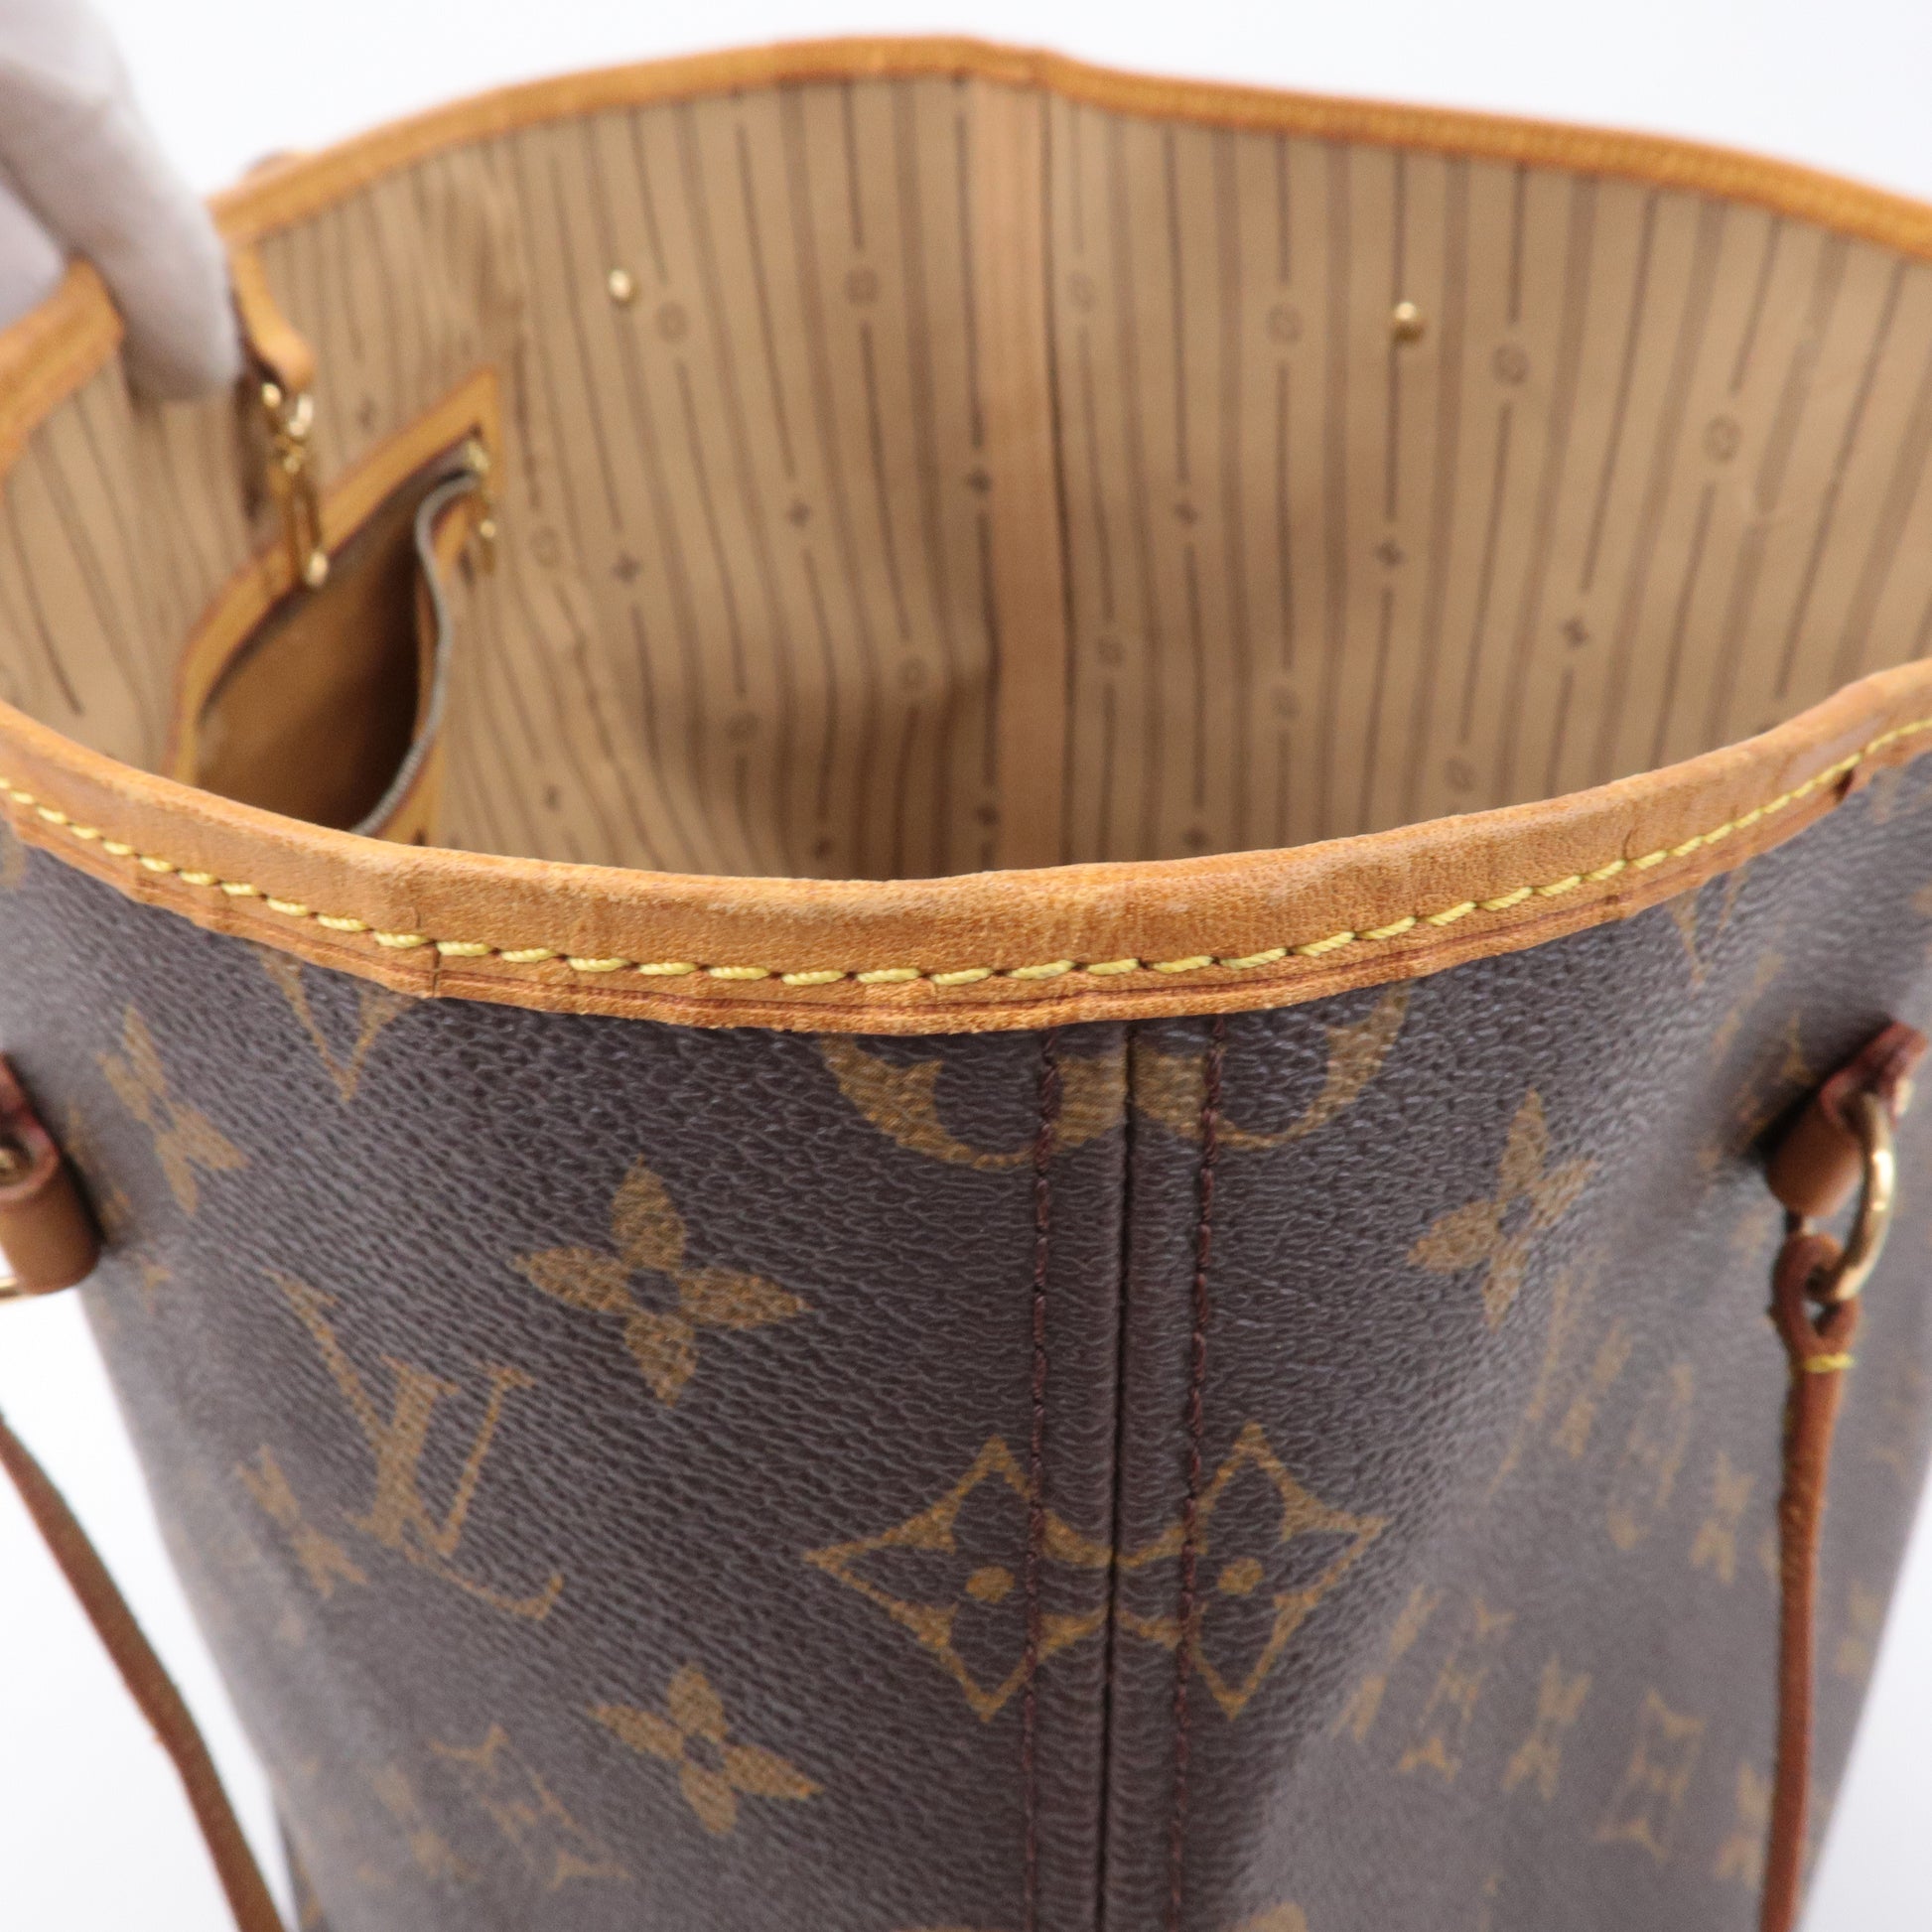 Louis-Vuitton-Monogram-Neverfull-GM-Tote-Bag-Brown-M40157 – dct